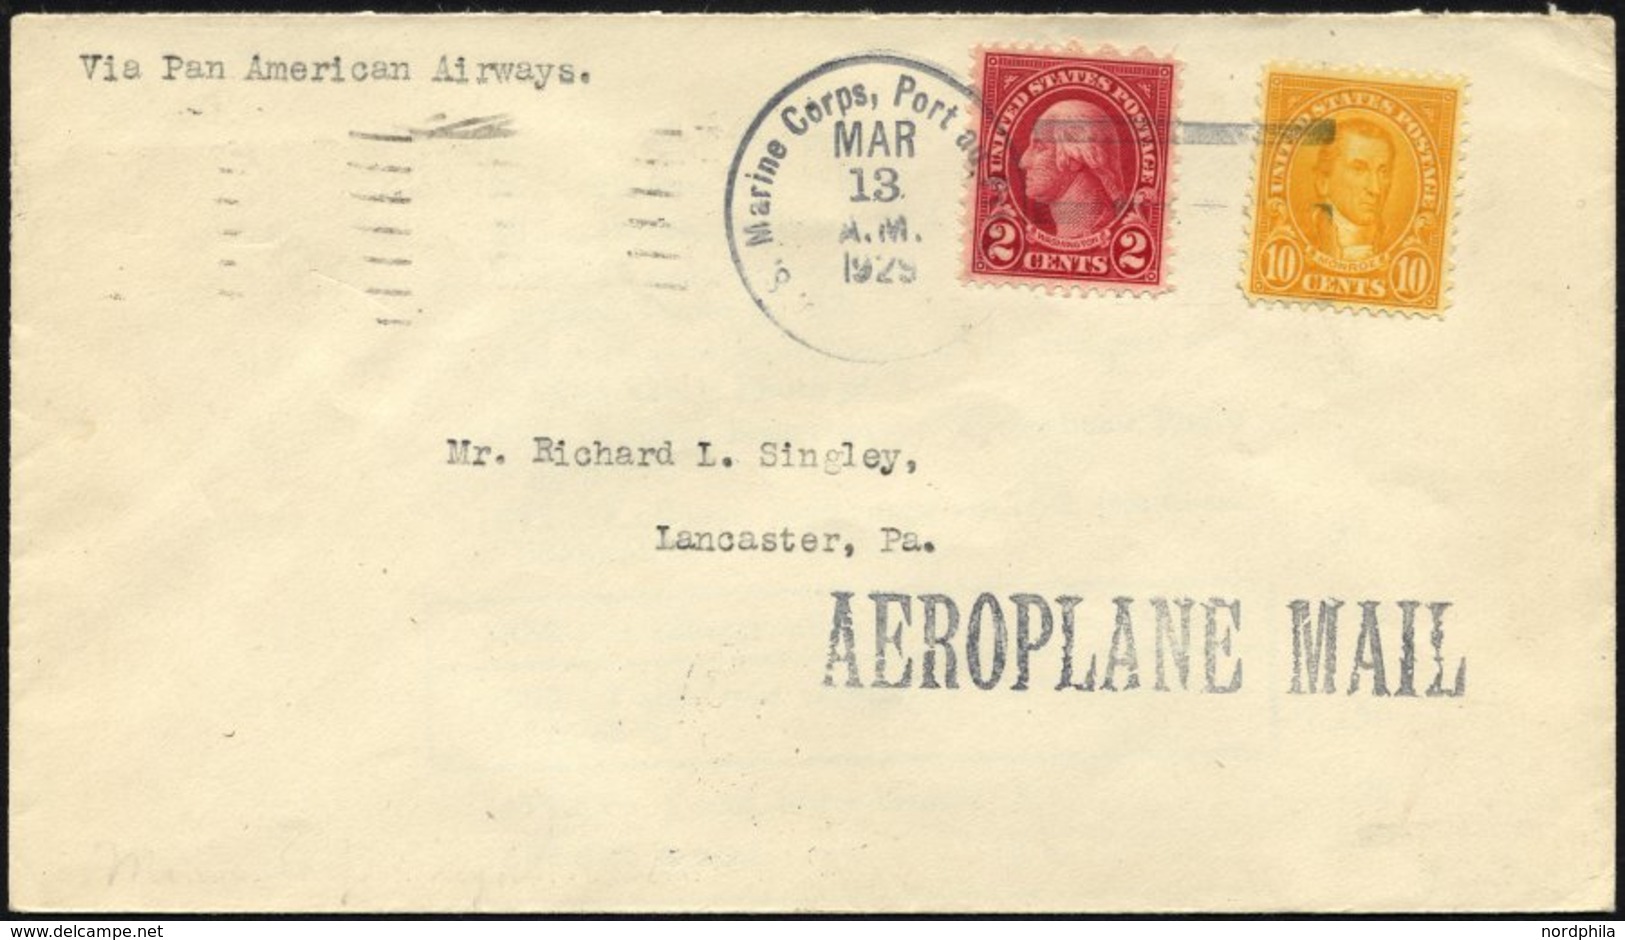 FELDPOST 1929, U.S. MARINE CORPS PORT AU PRINCE Auf Feld-Luftpostbrief Aus Haiti, Feinst - Usati